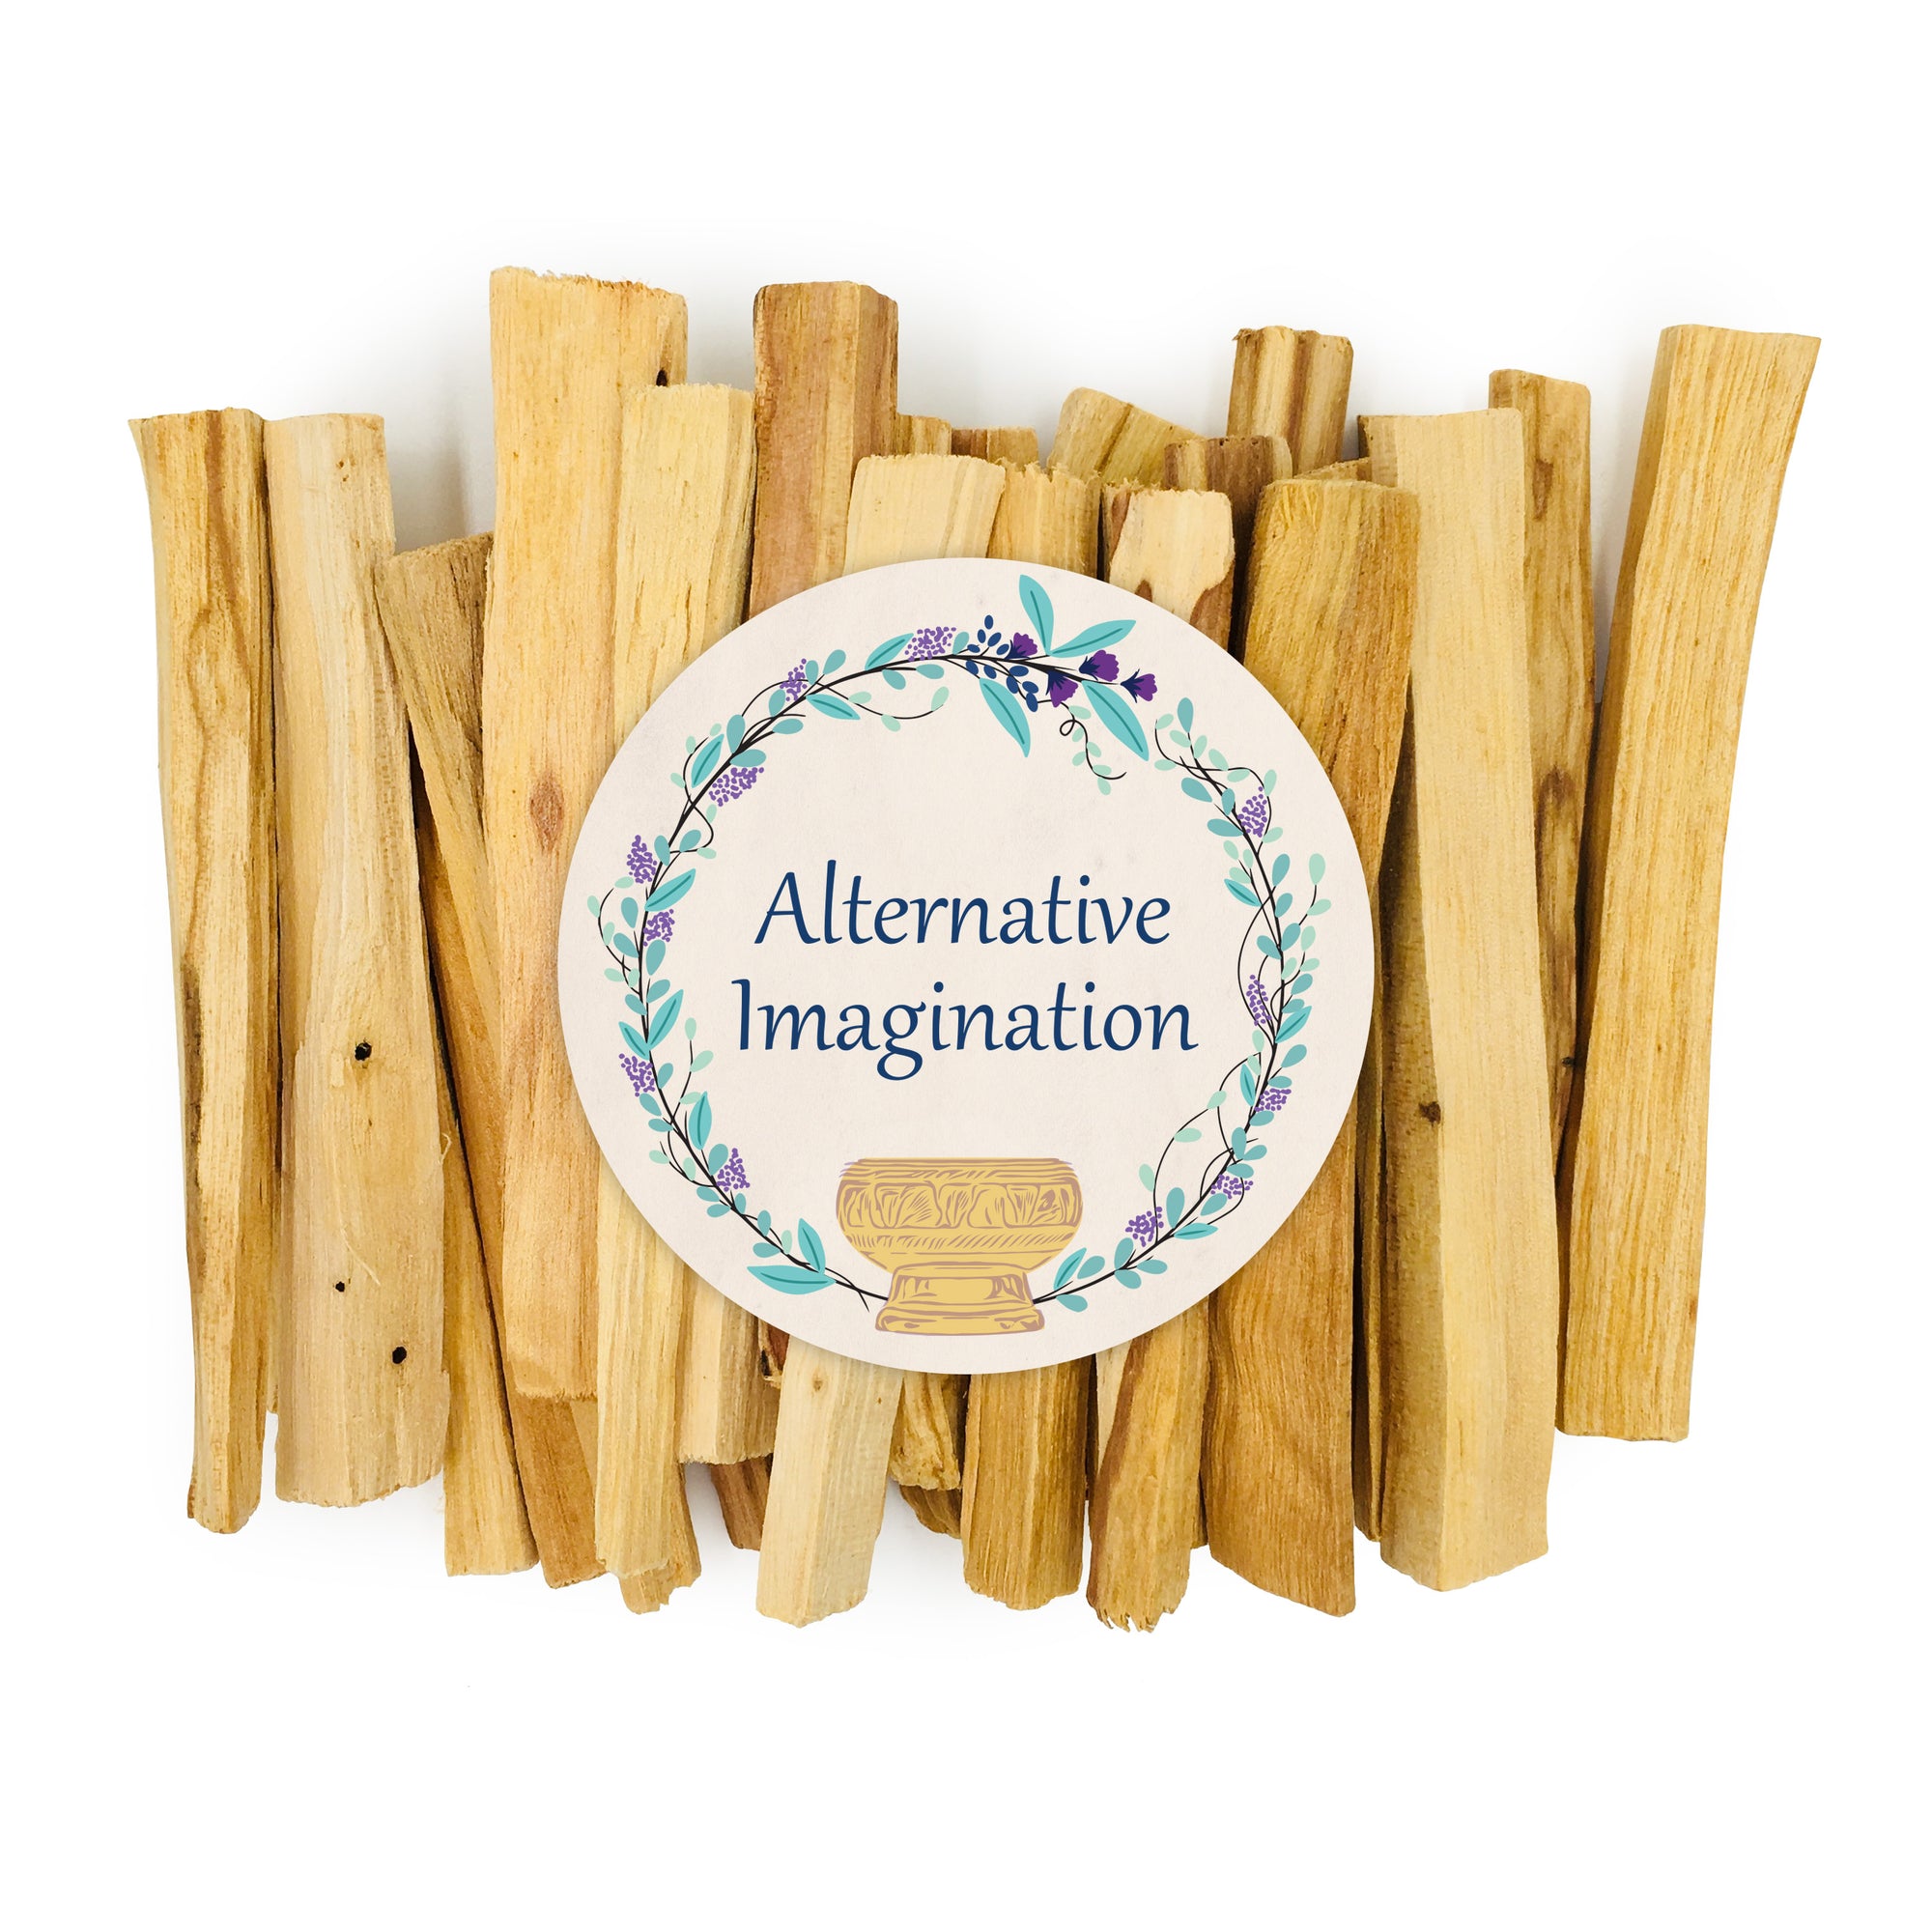 Kit Diffuser Palo Santo Burner for holy wood Incense Sticks + 4 Natural  Pequeno